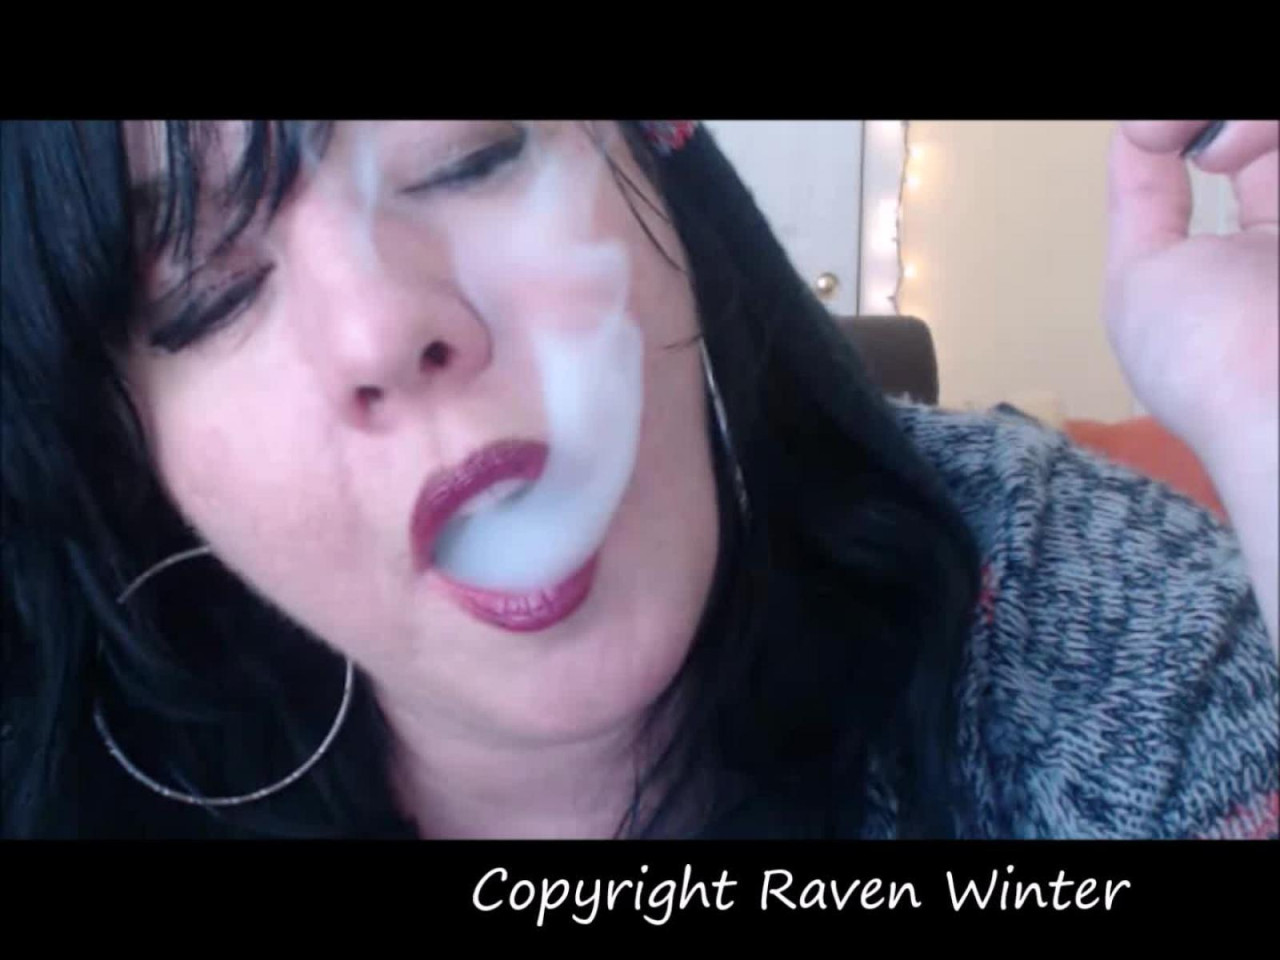 raven_winter sex video release [2021/12/19]